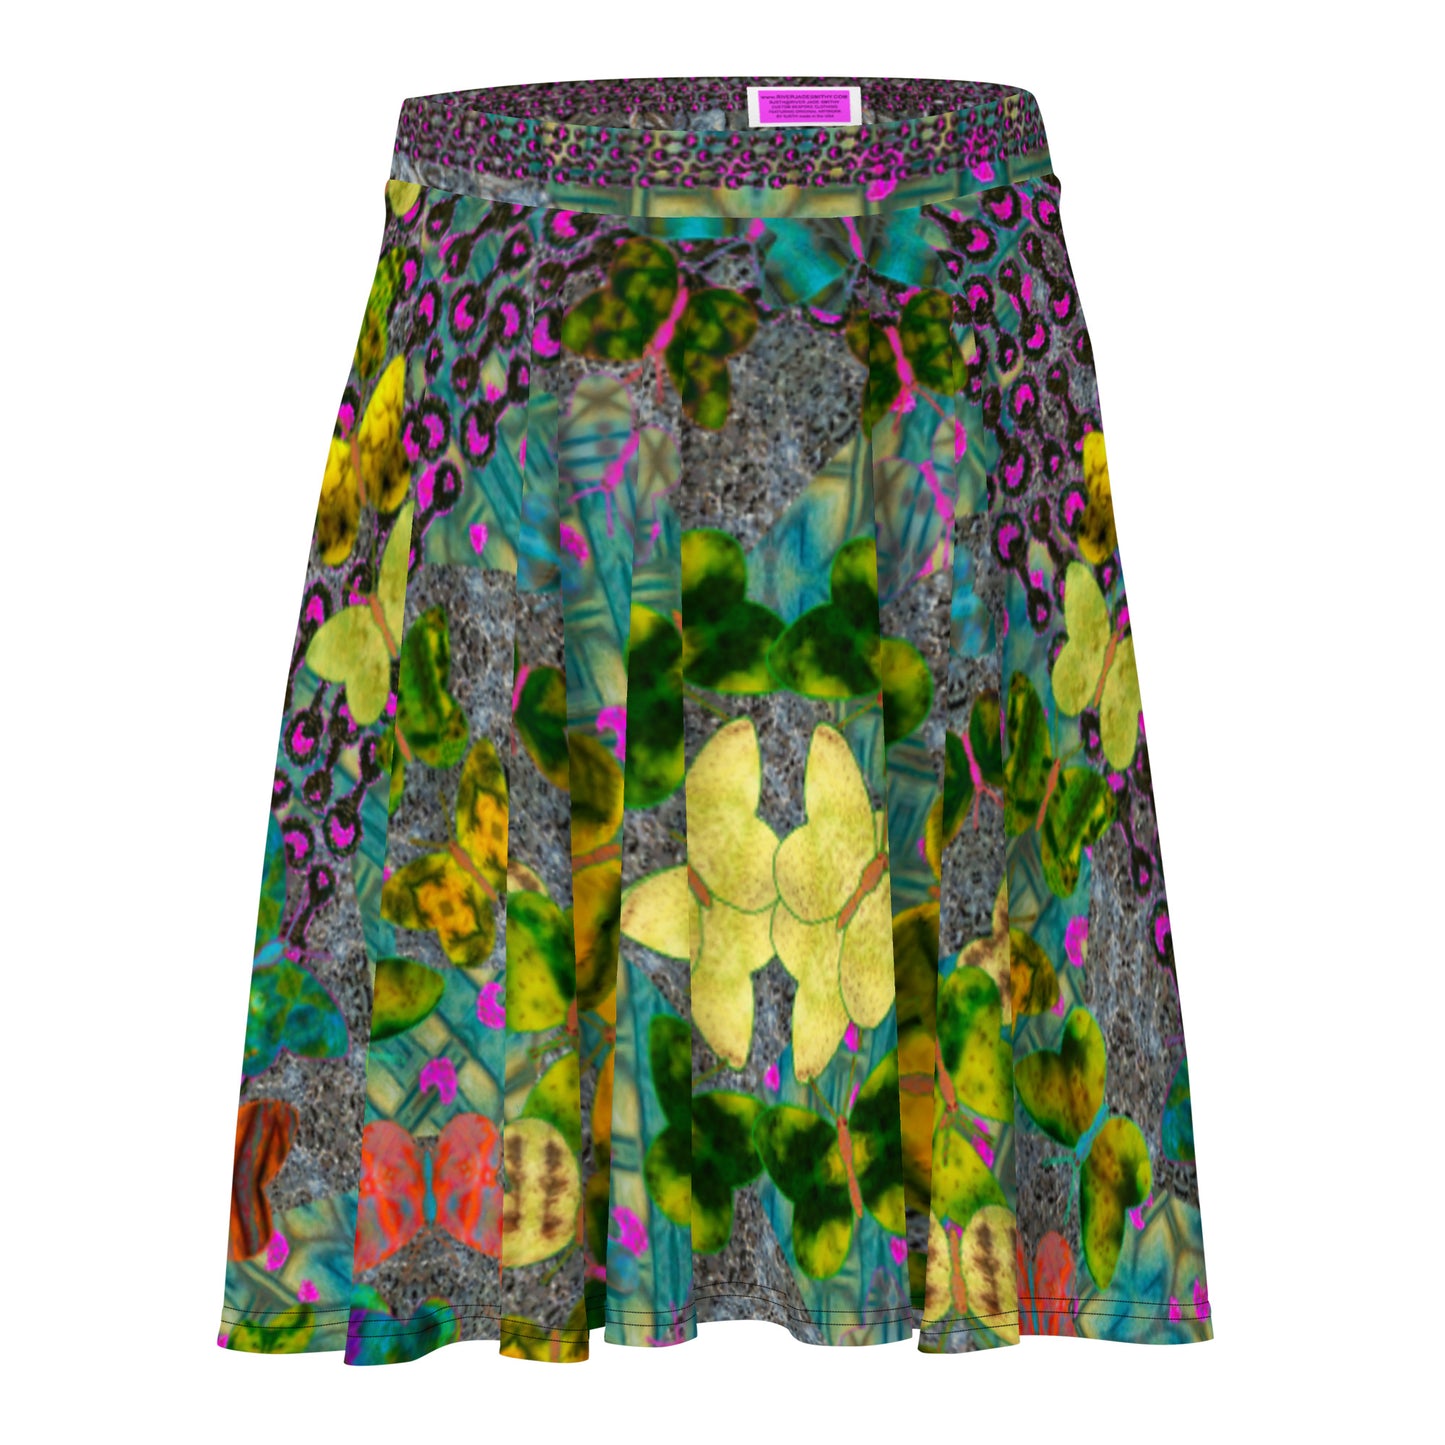 Skater Skirt (Her/They)(Butterfly Glade Shoal Solstice GNHV 8.9) RJSTH@Fabric#9 RJSTHw2021 RJS